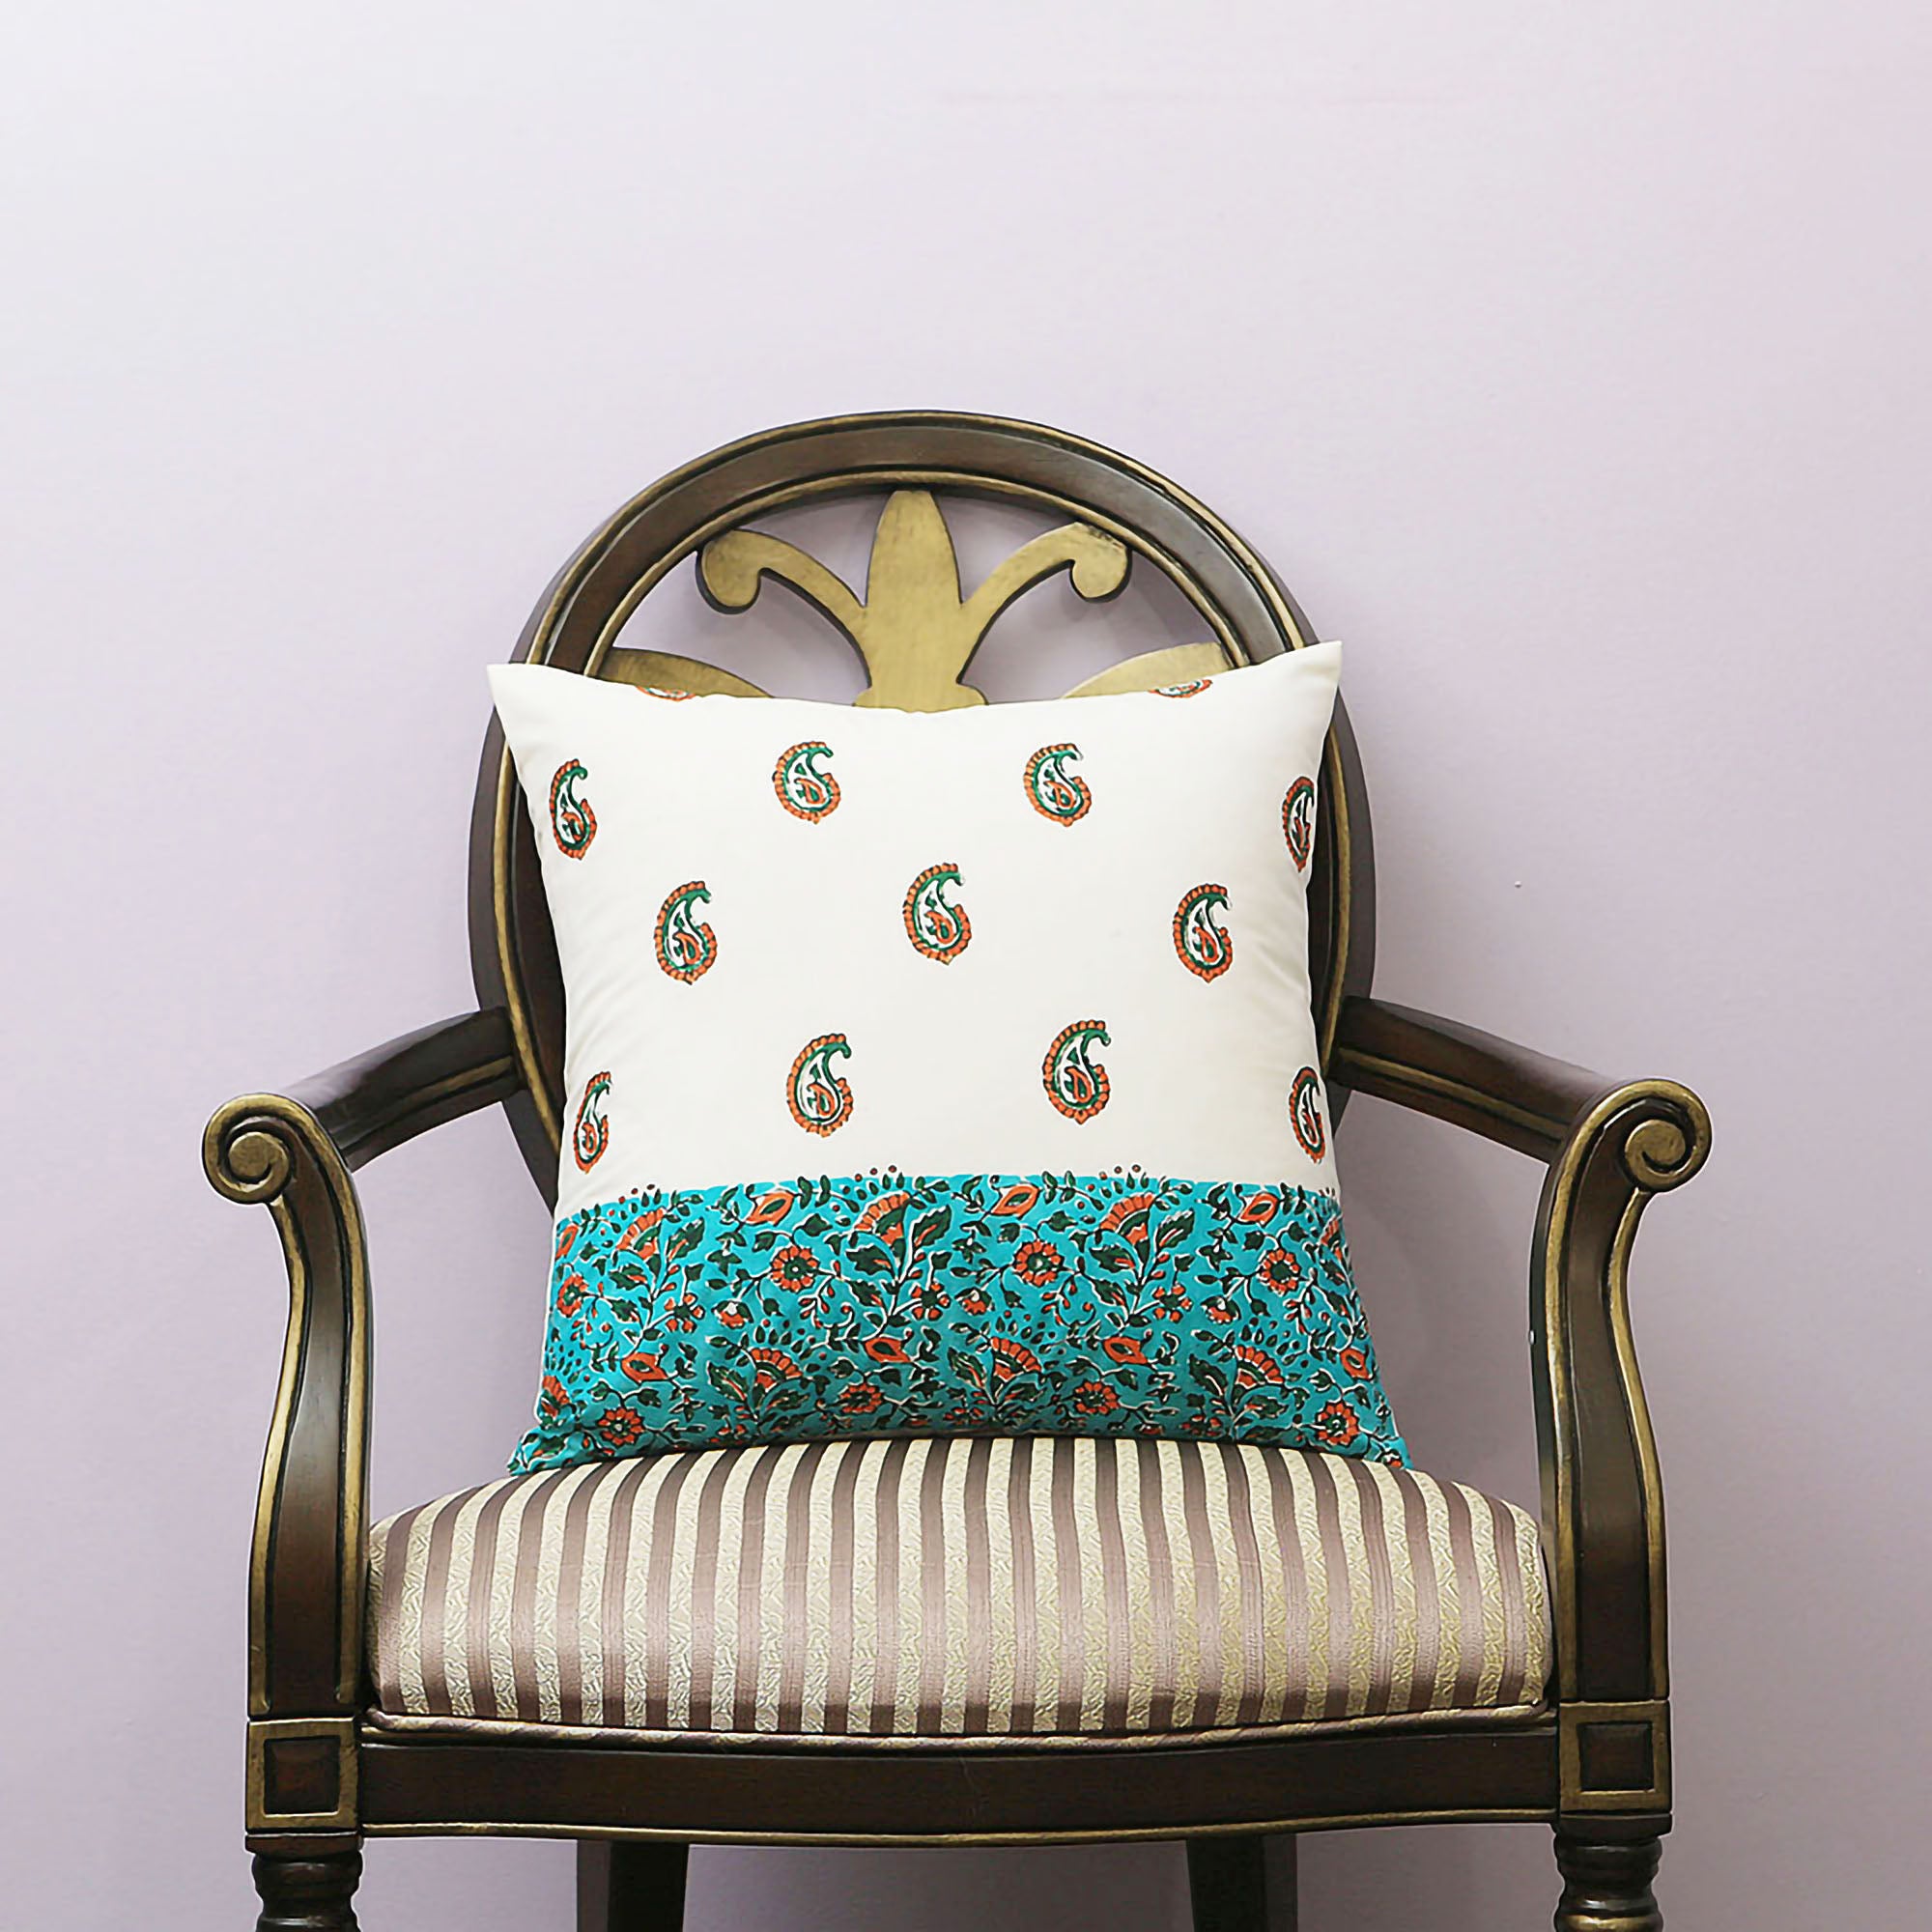 Handmade Blockprint Cotton  Decorative Throw Pillow & Cushion Cover 18 x 18 inches Paisley Print